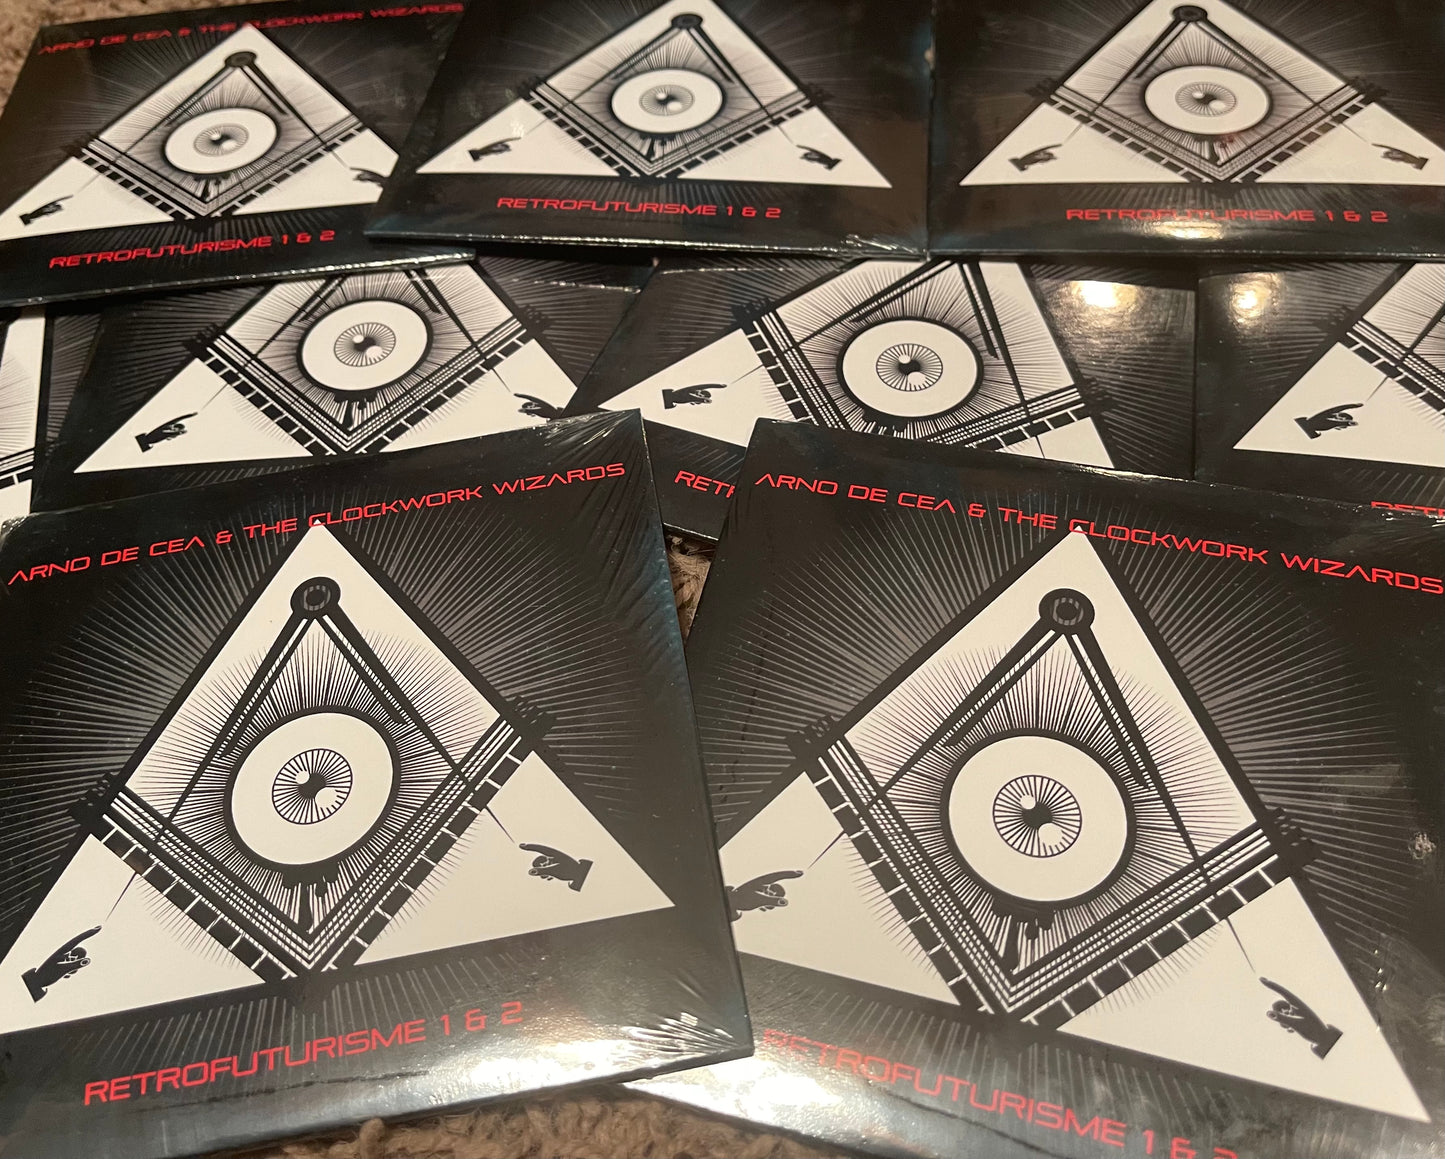 OMR-045 Arno De Cea & The Clockwork Wizards "Retrofuturisme 1 & 2" CD